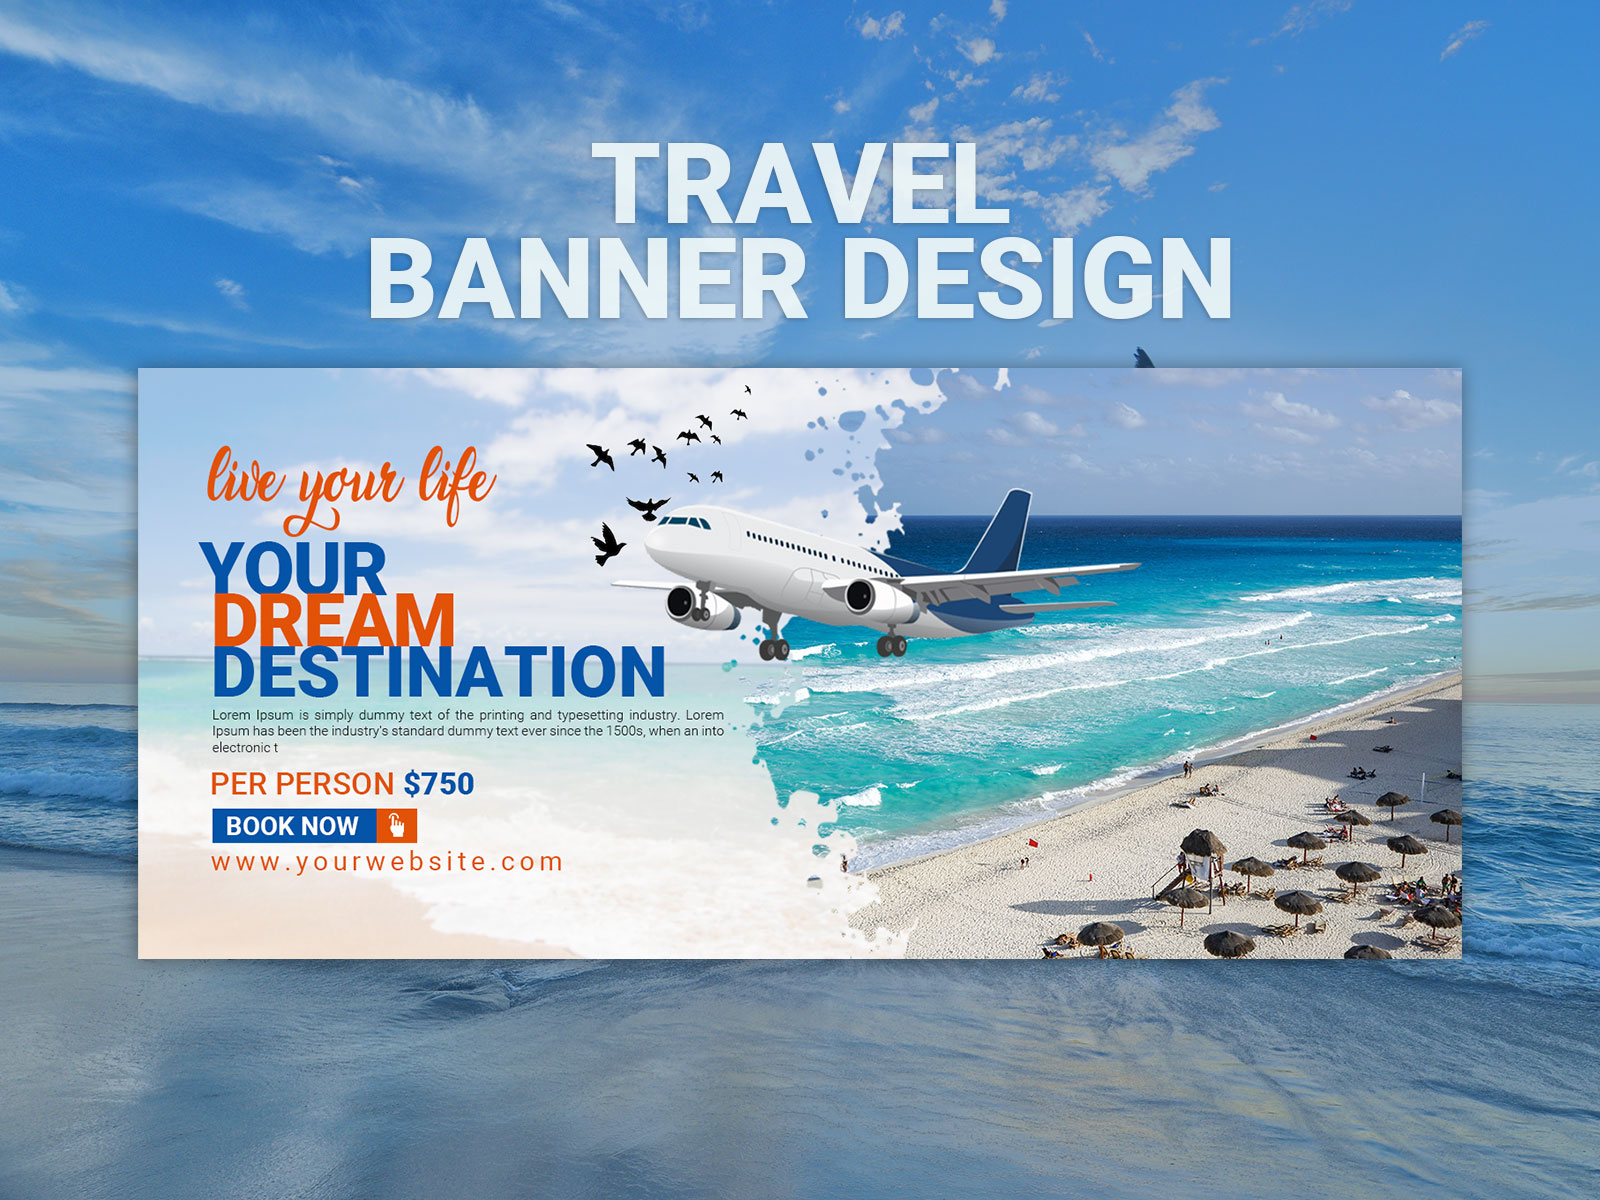 travel banner images